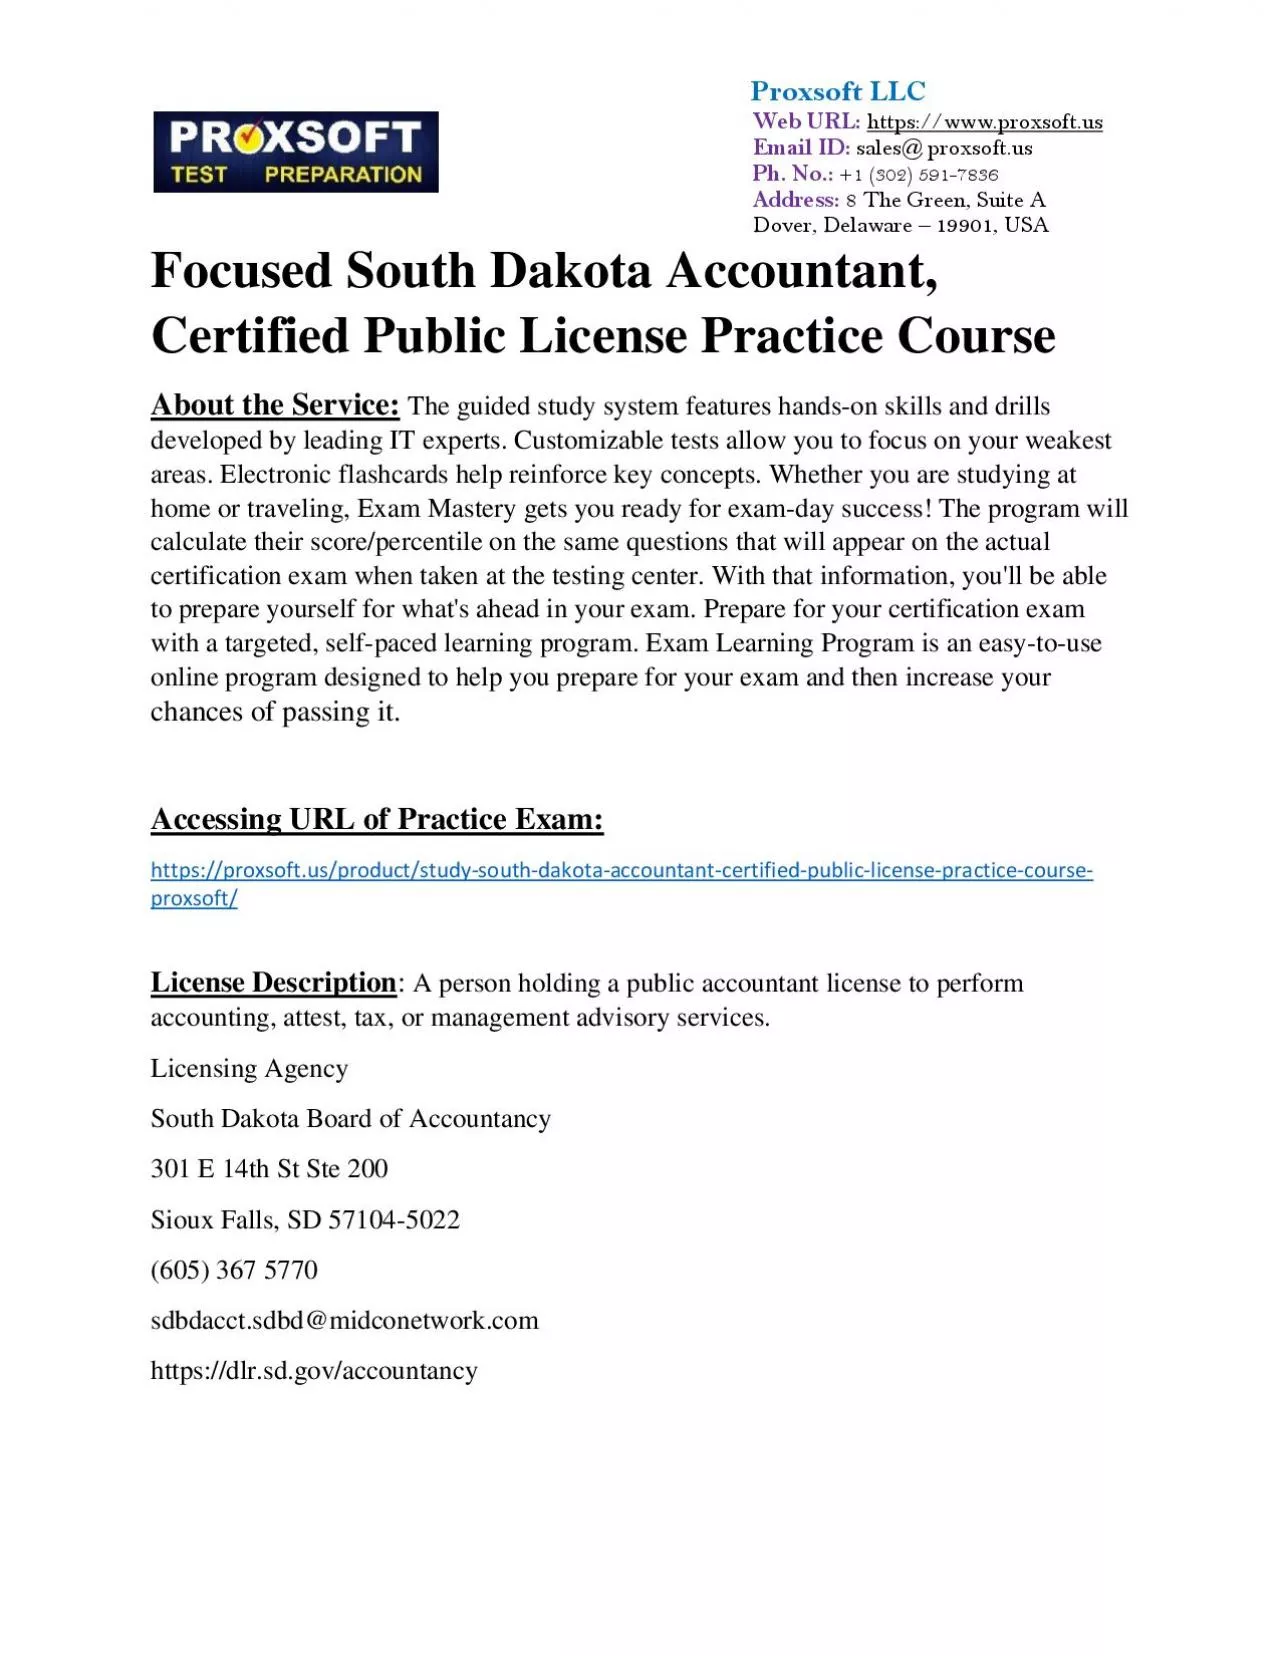 Focused South Dakota Accountant, Certified Public License Practice Course